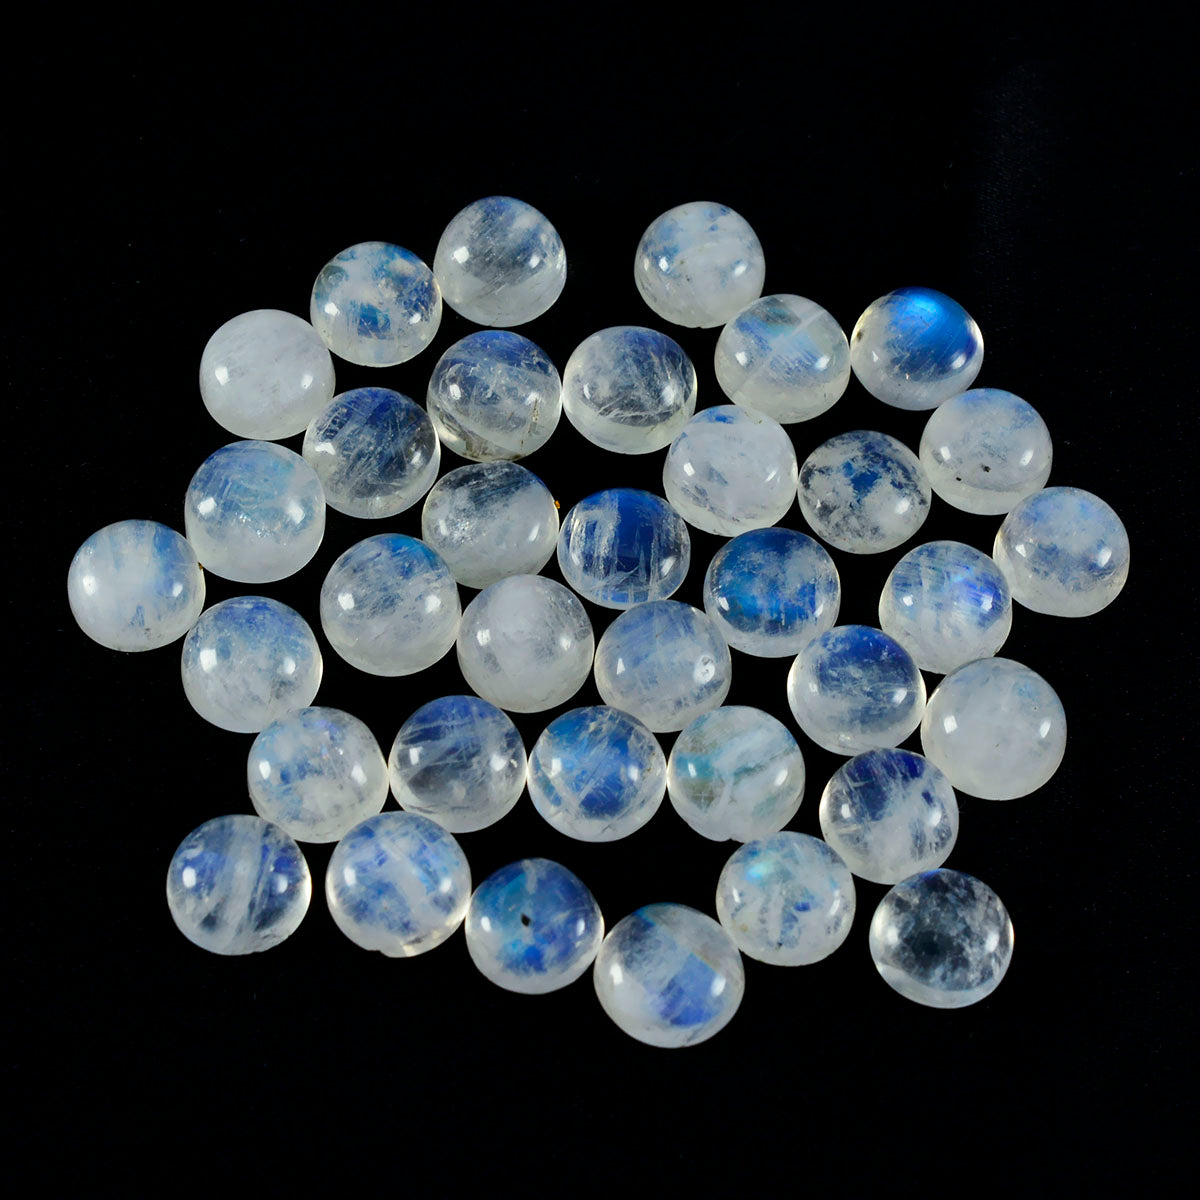 riyogems 1 шт., белый радужный лунный камень, кабошон 5x5 мм, круглая форма, качество, свободный драгоценный камень